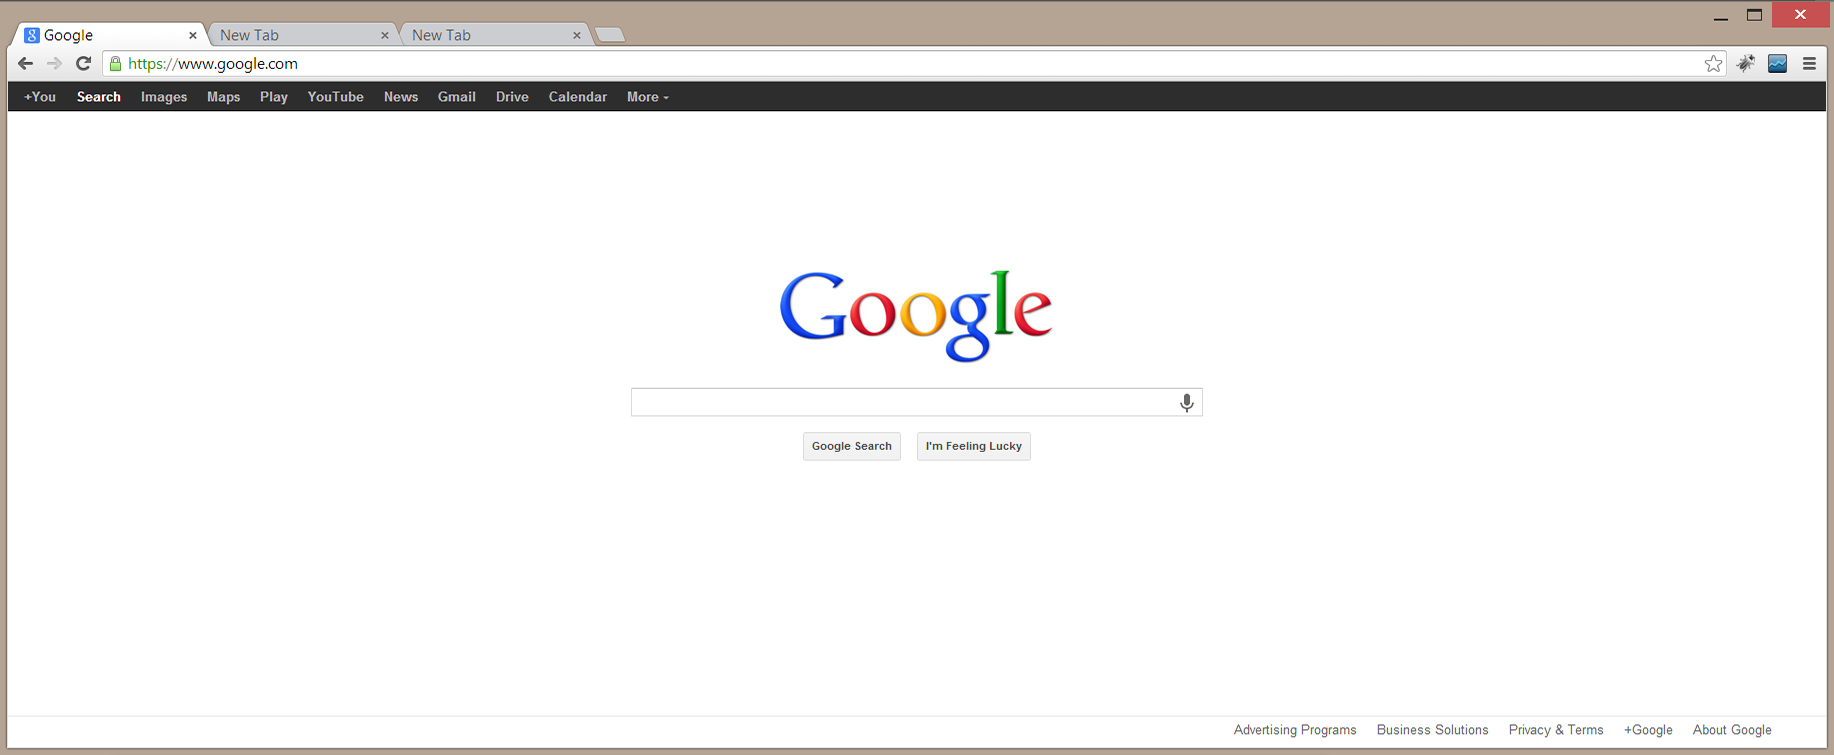 Google Chrome Browser Download For Windows 7 64 Bit